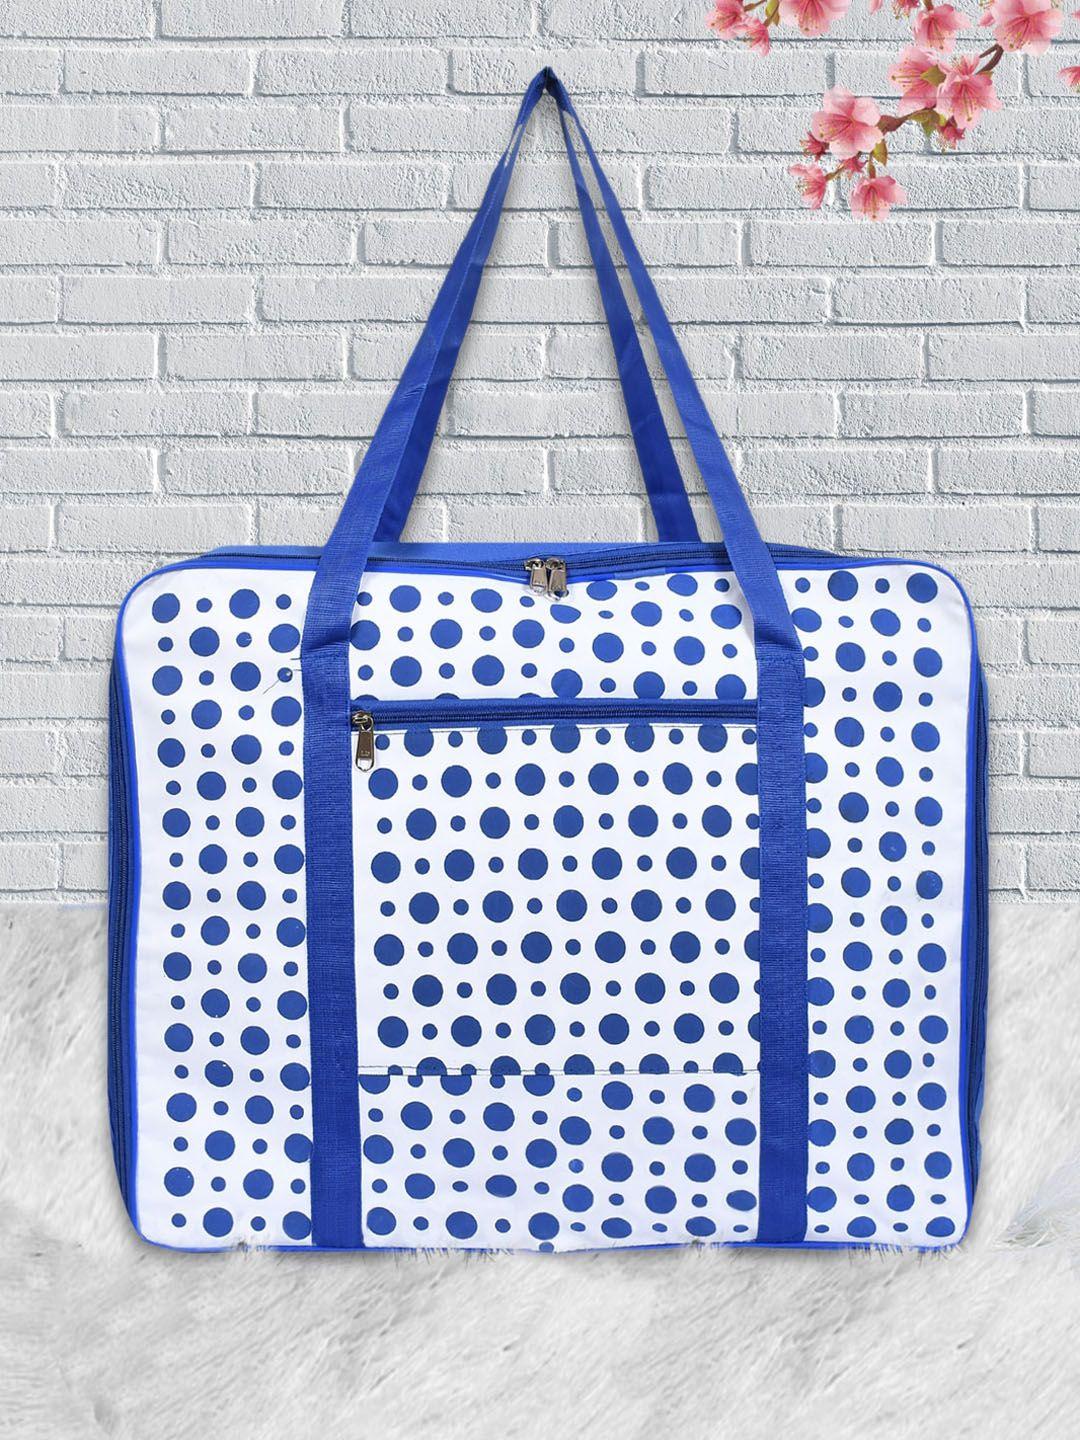 kuber industries white & blue dot printed large size foldable travel luggage duffle bag